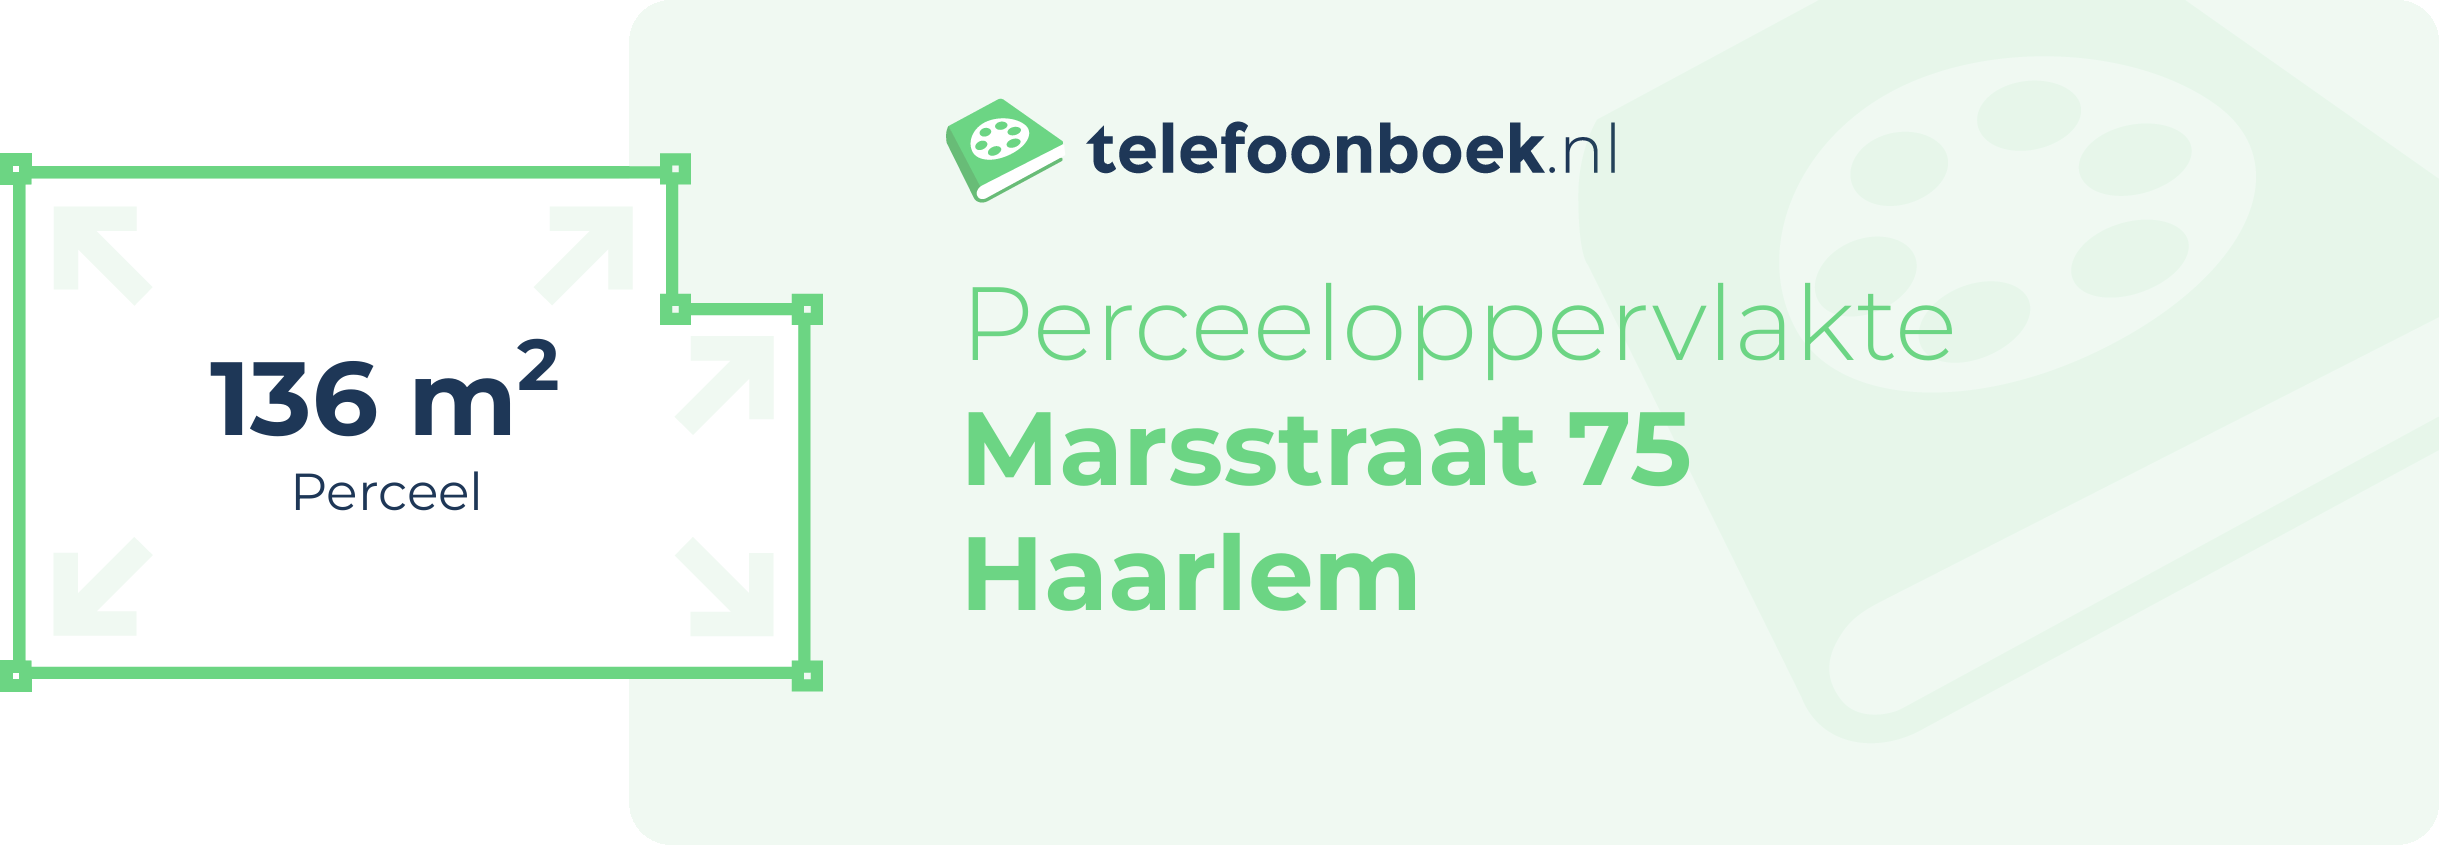 Perceeloppervlakte Marsstraat 75 Haarlem